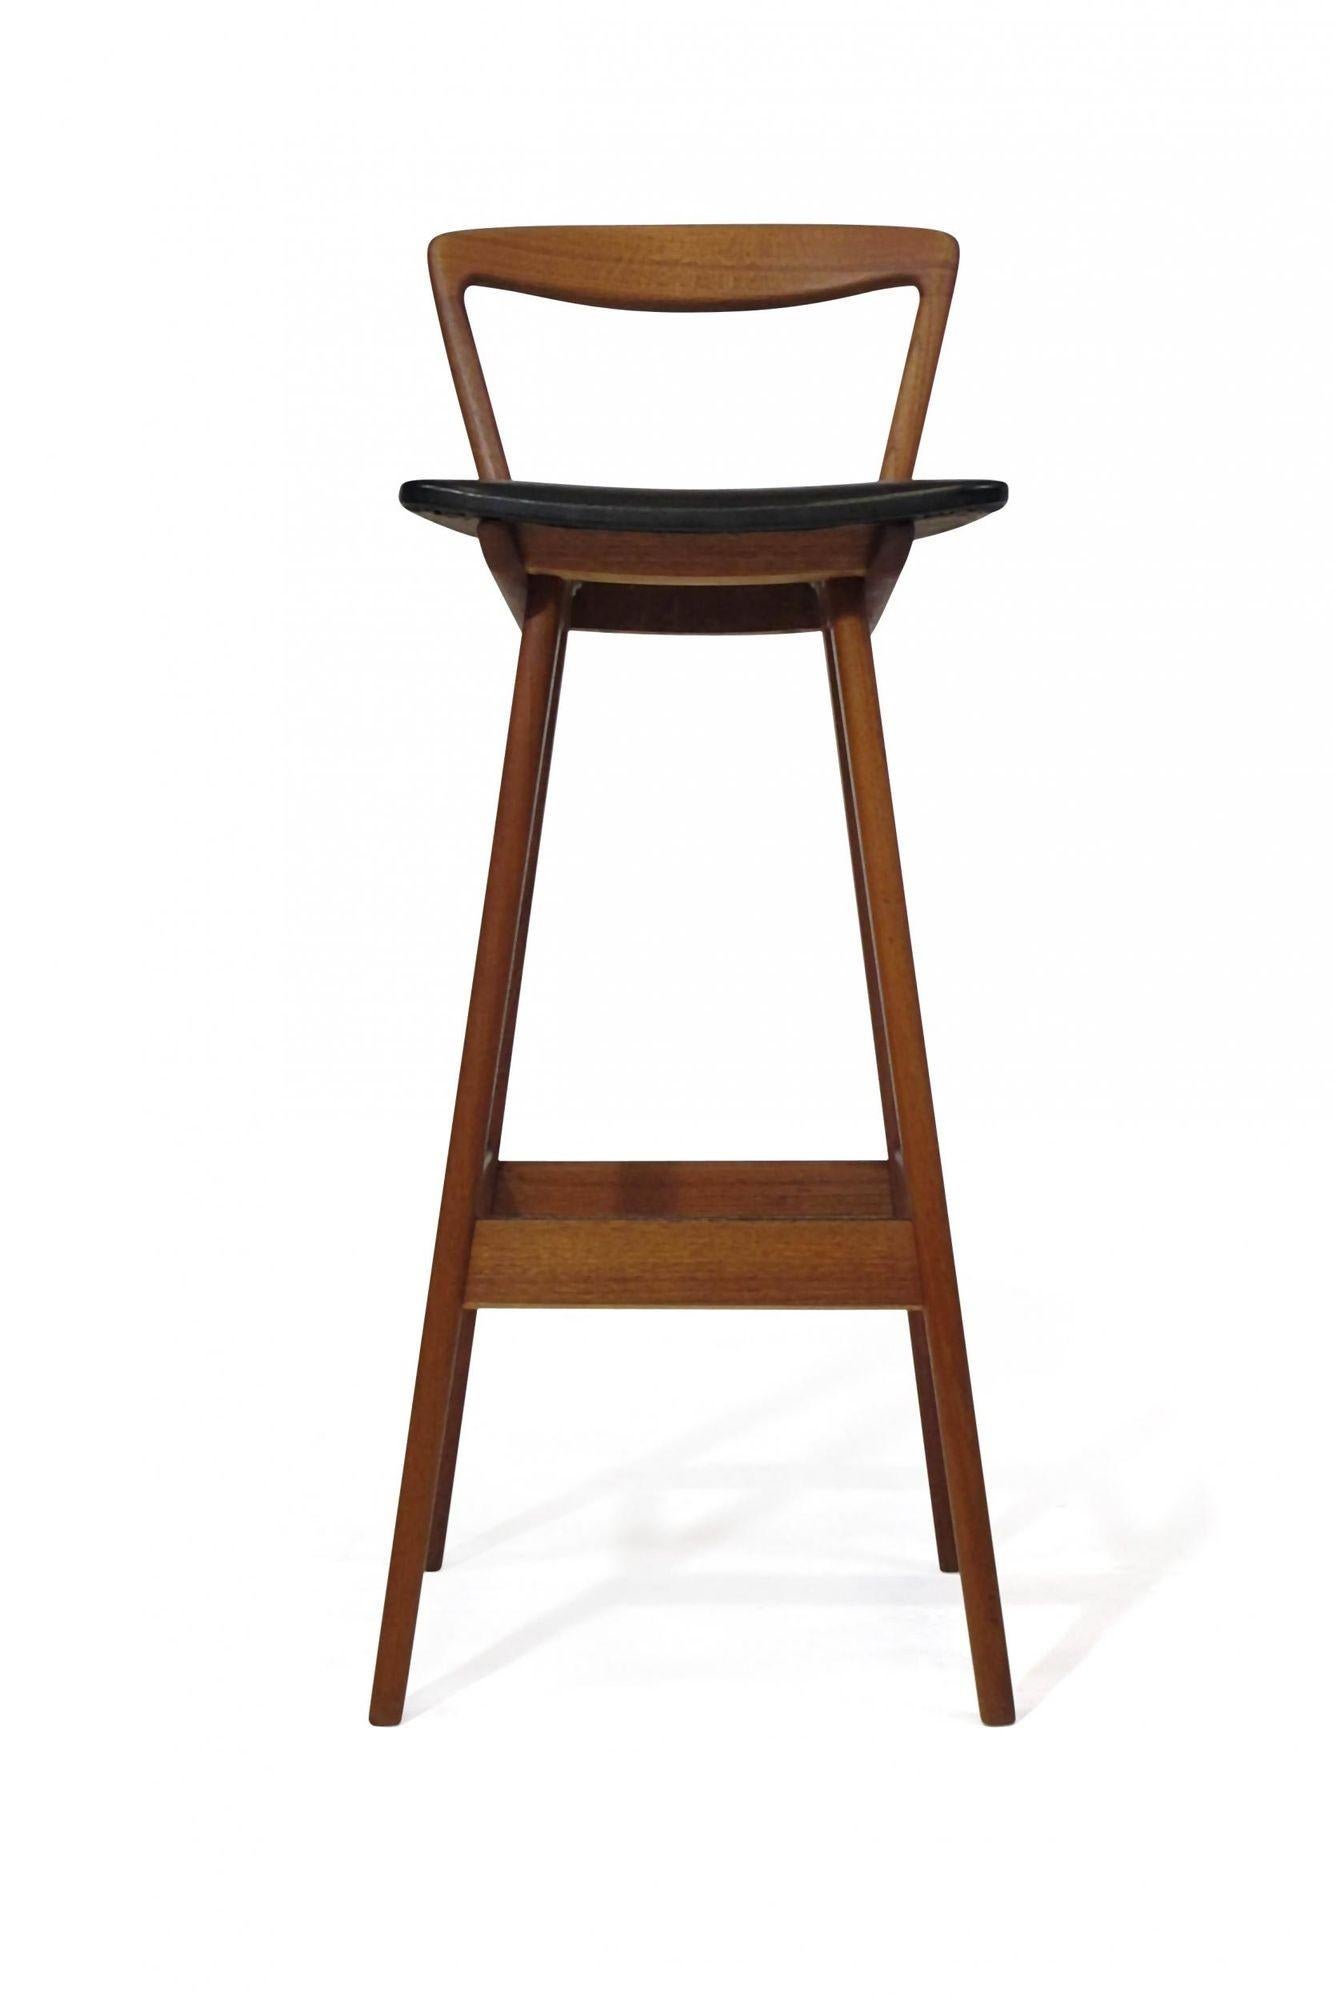 midcentury teak bar stool designed by Henry Rosengren Hansen for Brande Mobelfabrik model 43, Denmark. Barstool crafted of solid teak frame, elegantly sculpted backrest with the original black vinyl seat, raised on flared legs. Excellent condition